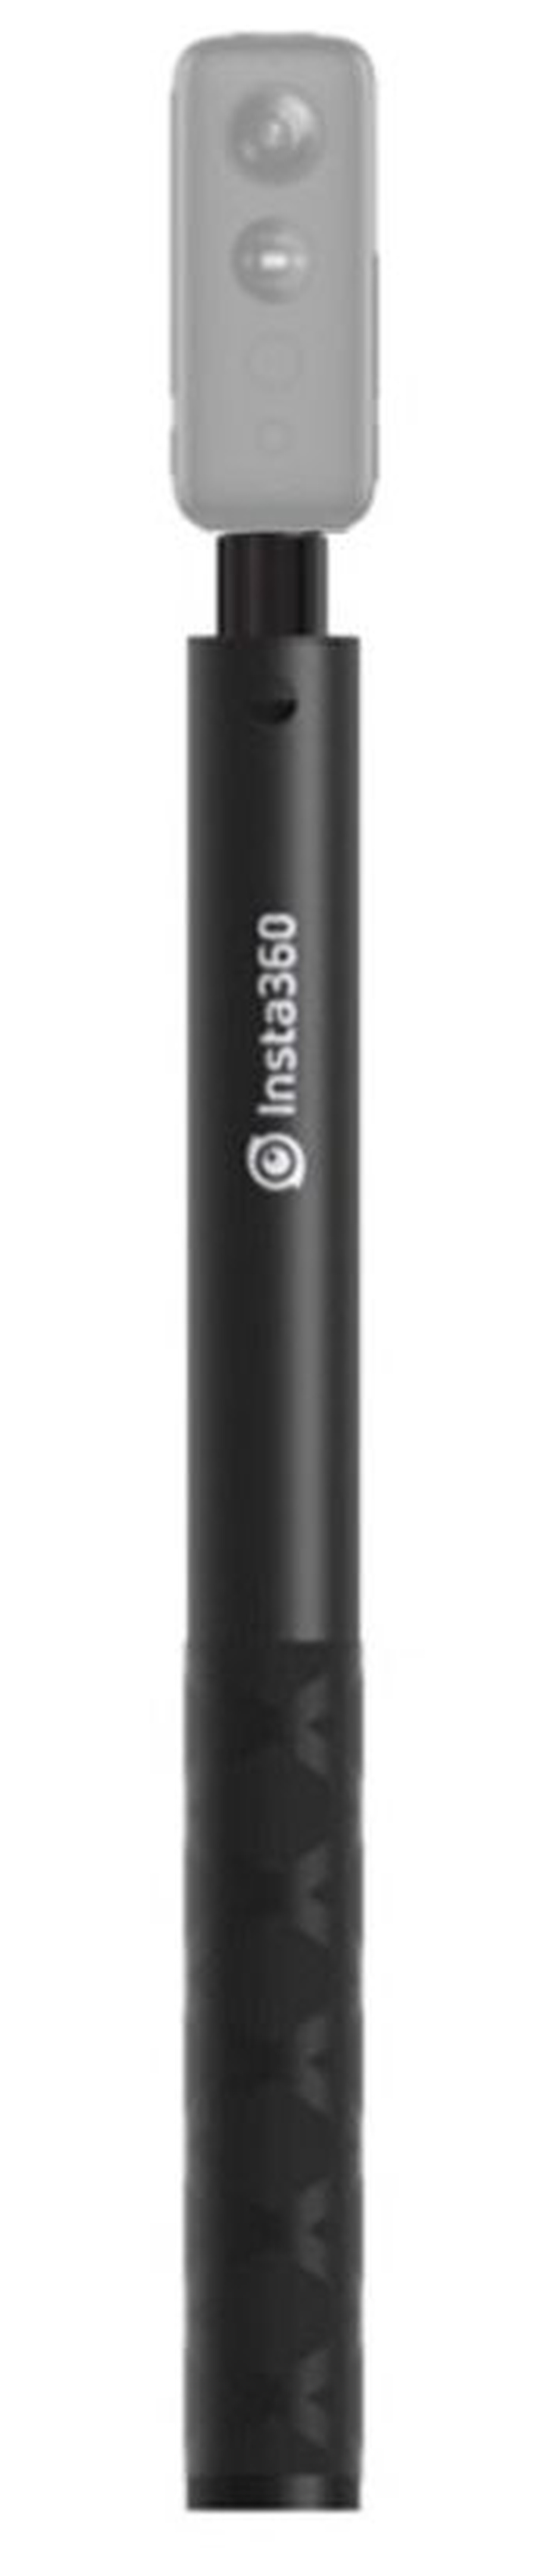 Селфи-палка Insta360 Винт 1/4 дюйма, 28-120 см для камеры Insta360 ONE X / ONE / EVO фото